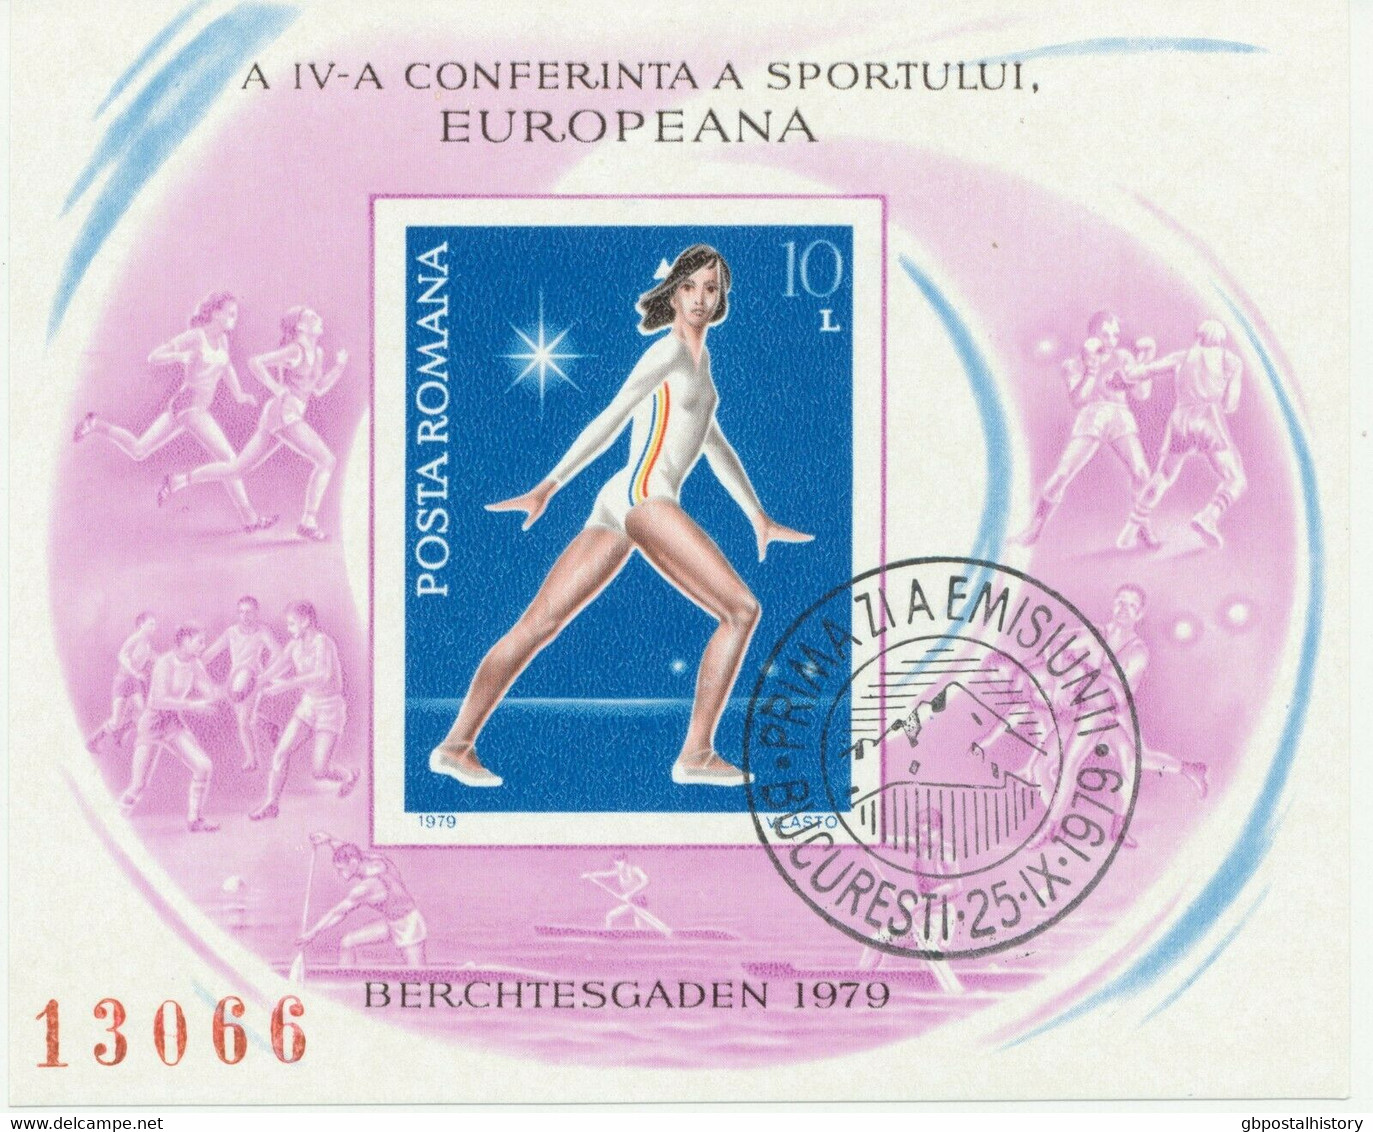 RUMÄNIEN 1979 VFU Block 10 L 4.Europäischer Sportkonferenz Berchtesgaden ABARTEN - Errors, Freaks & Oddities (EFO)